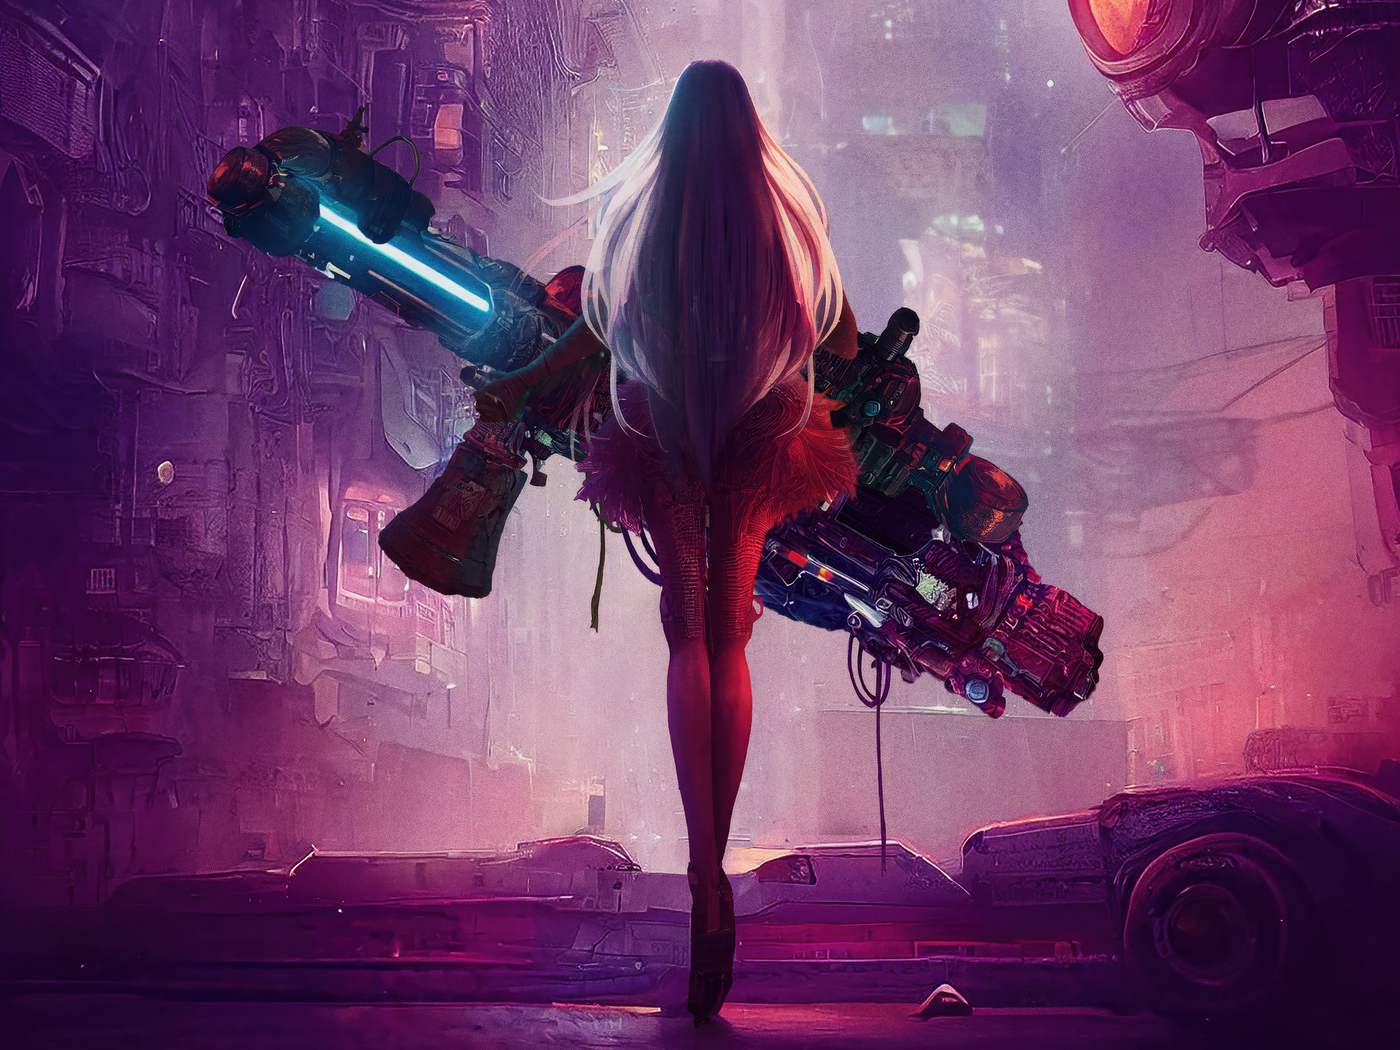 cyberpunk-girl-with-big-gun-in-scifi-world-2u.jpg